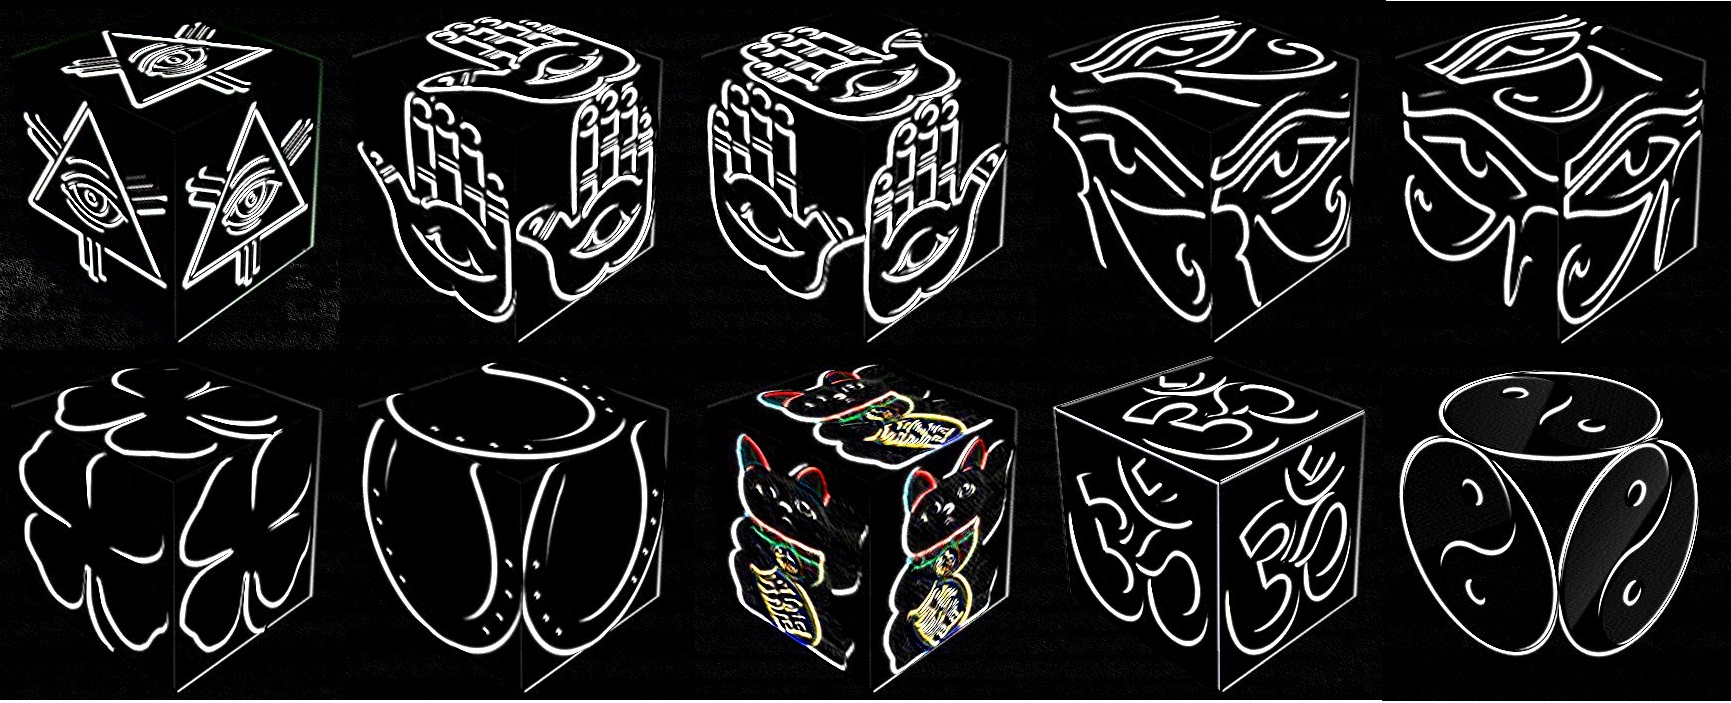 cube, 3d cube, lucky dice, luck symbols, Neon Eye of Fatima, Neon Eye of Providence, Neon Four Leaf Clover, Neon Horseshoe, Neon Maneki Neko